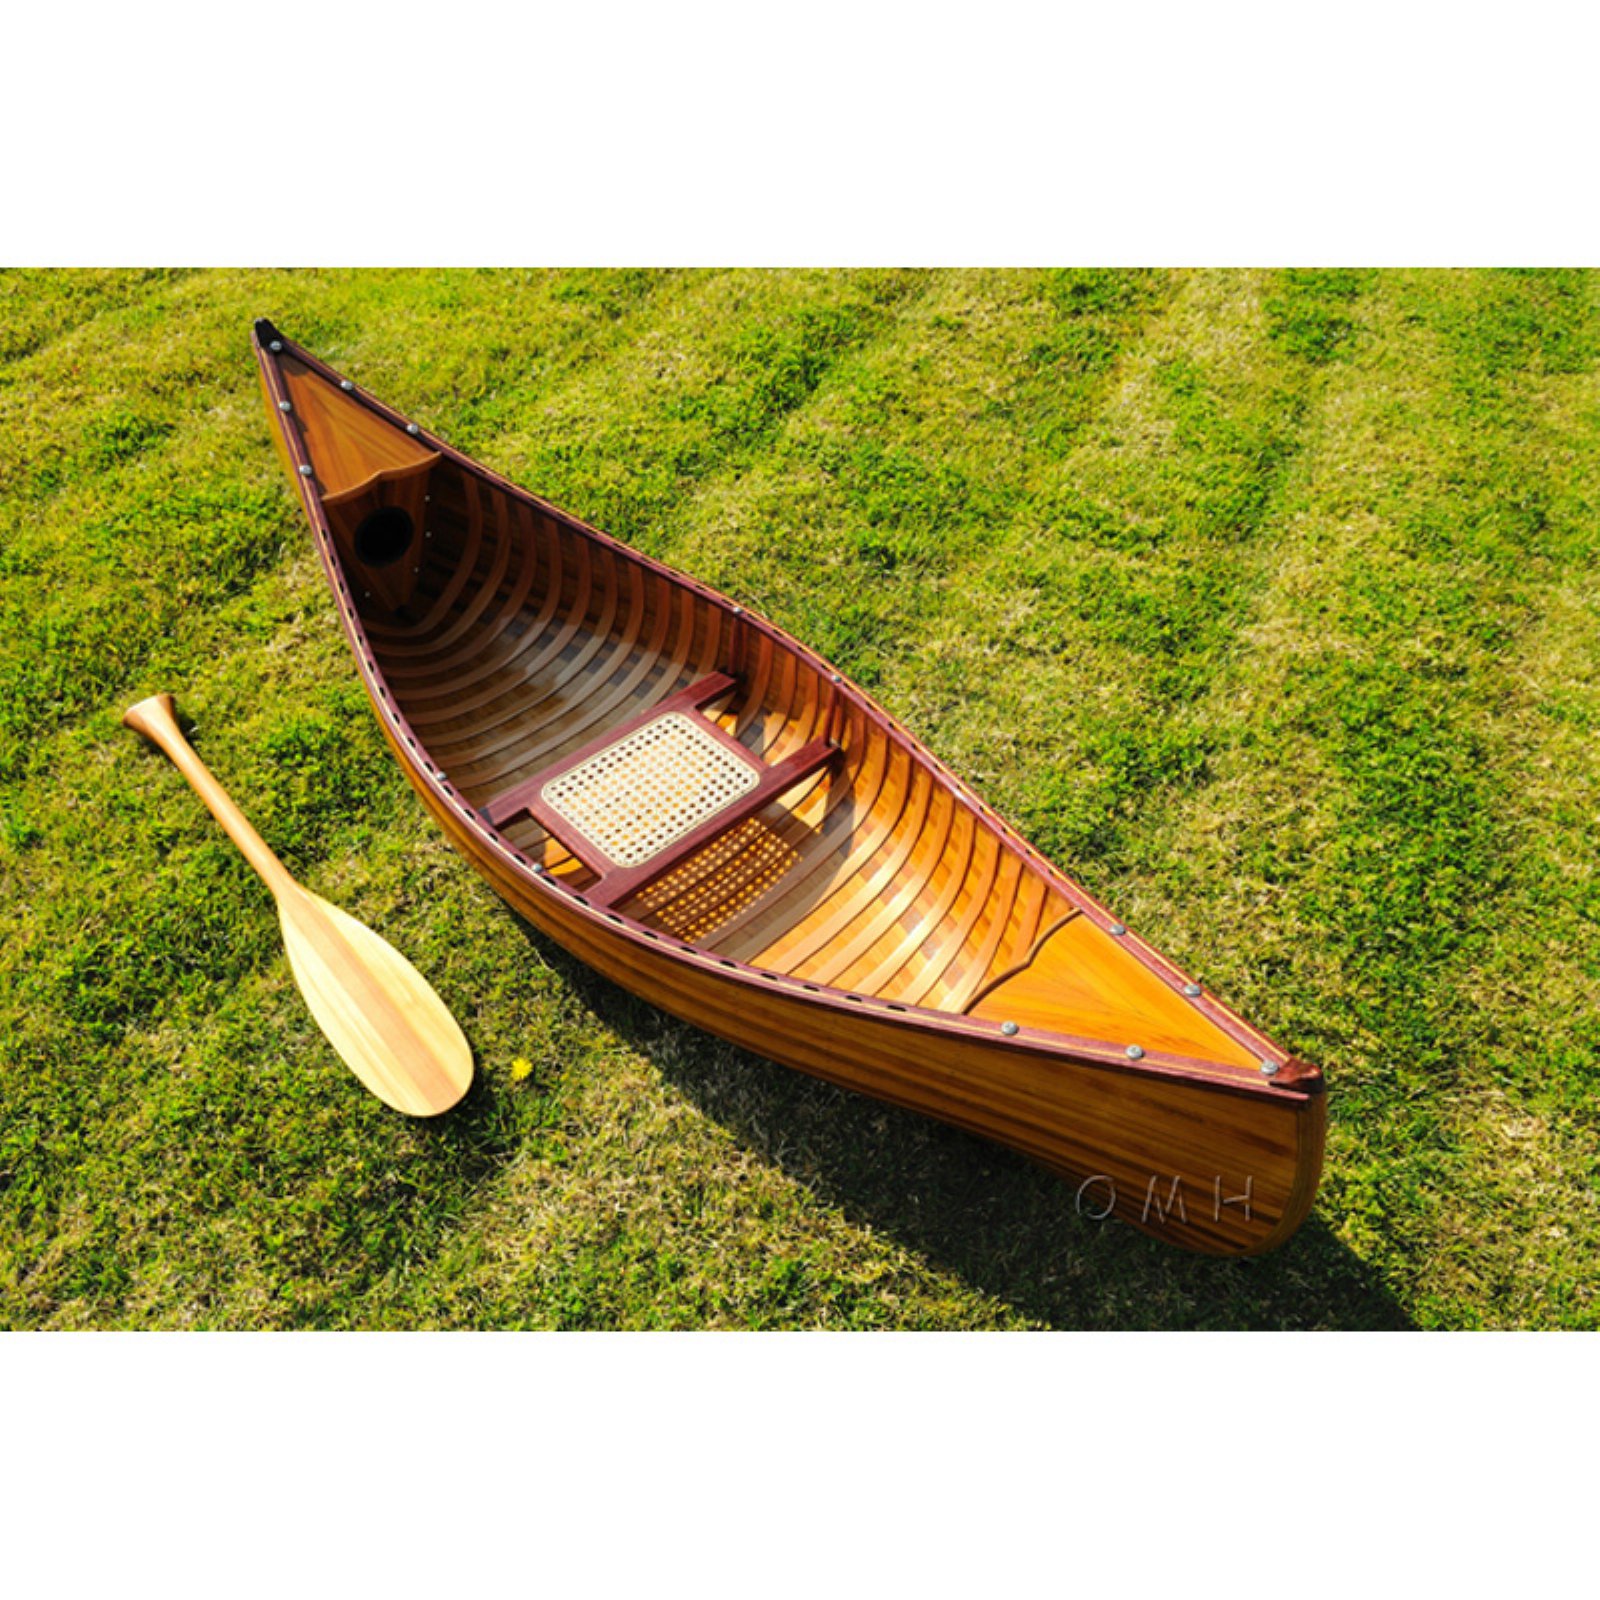 6 feet canoe with ribs - image 1 of 10